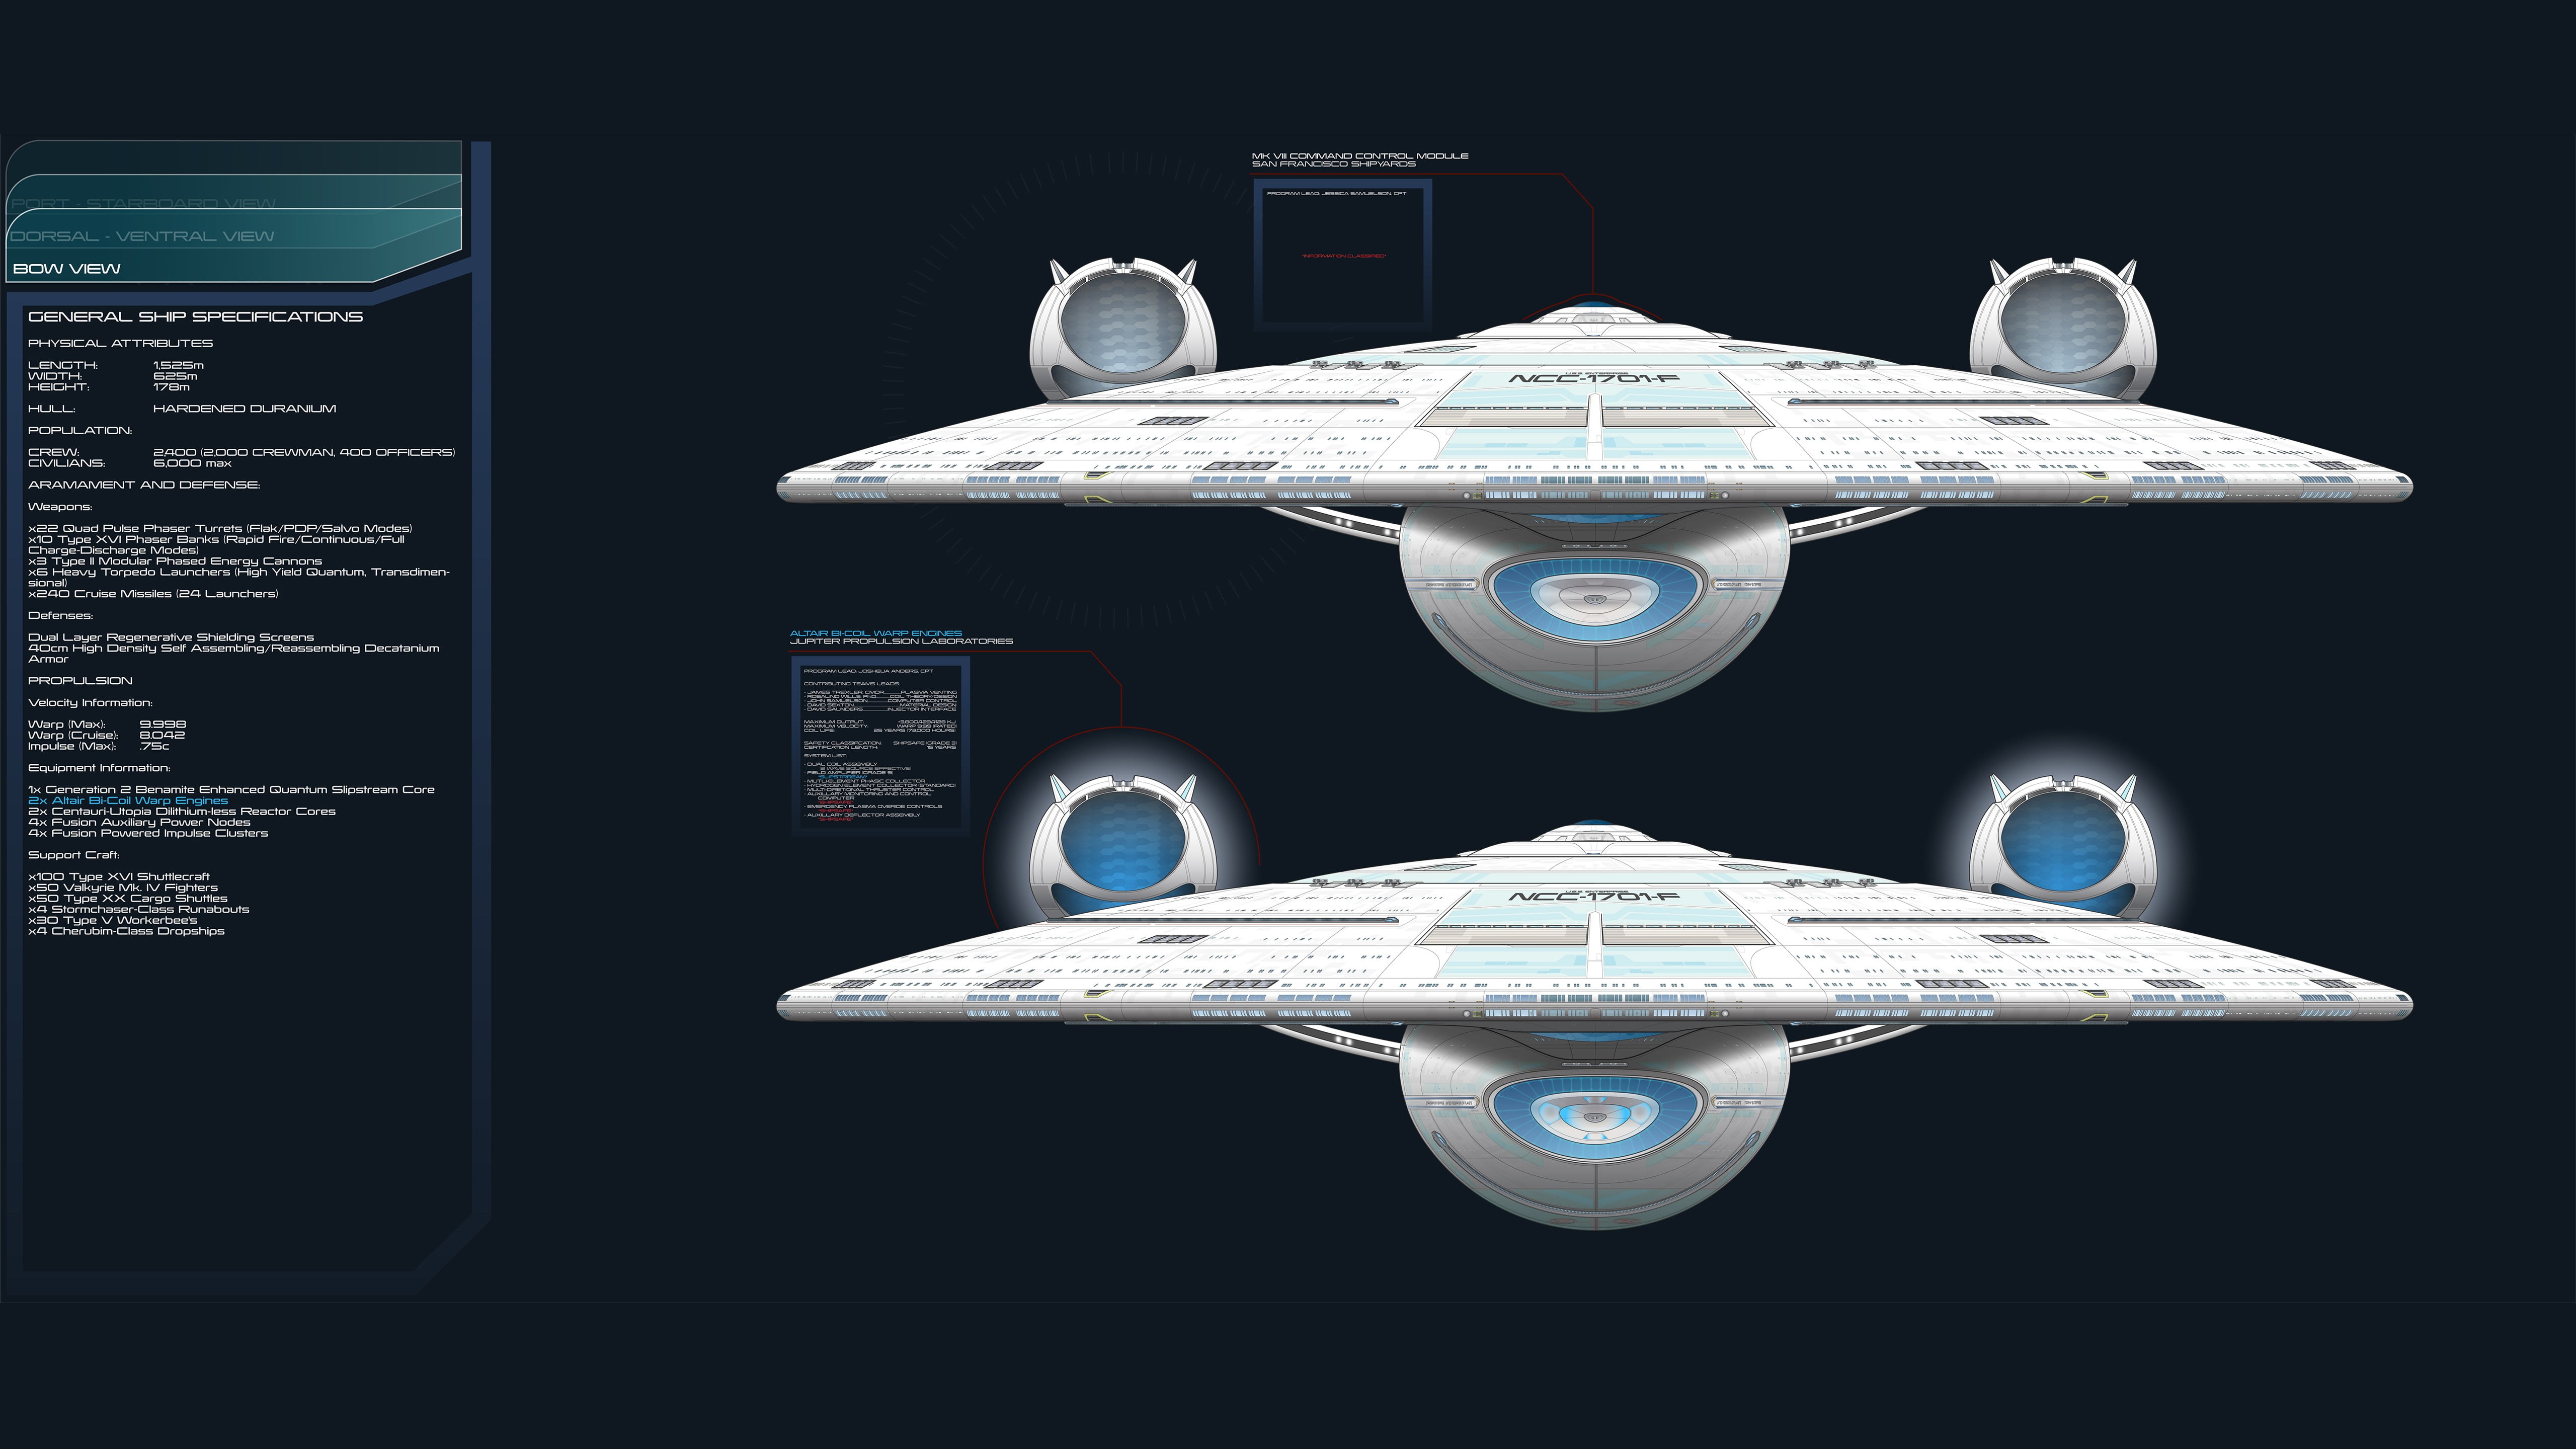 white space ship illustration, Star Trek, USS Enterprise (spaceship)